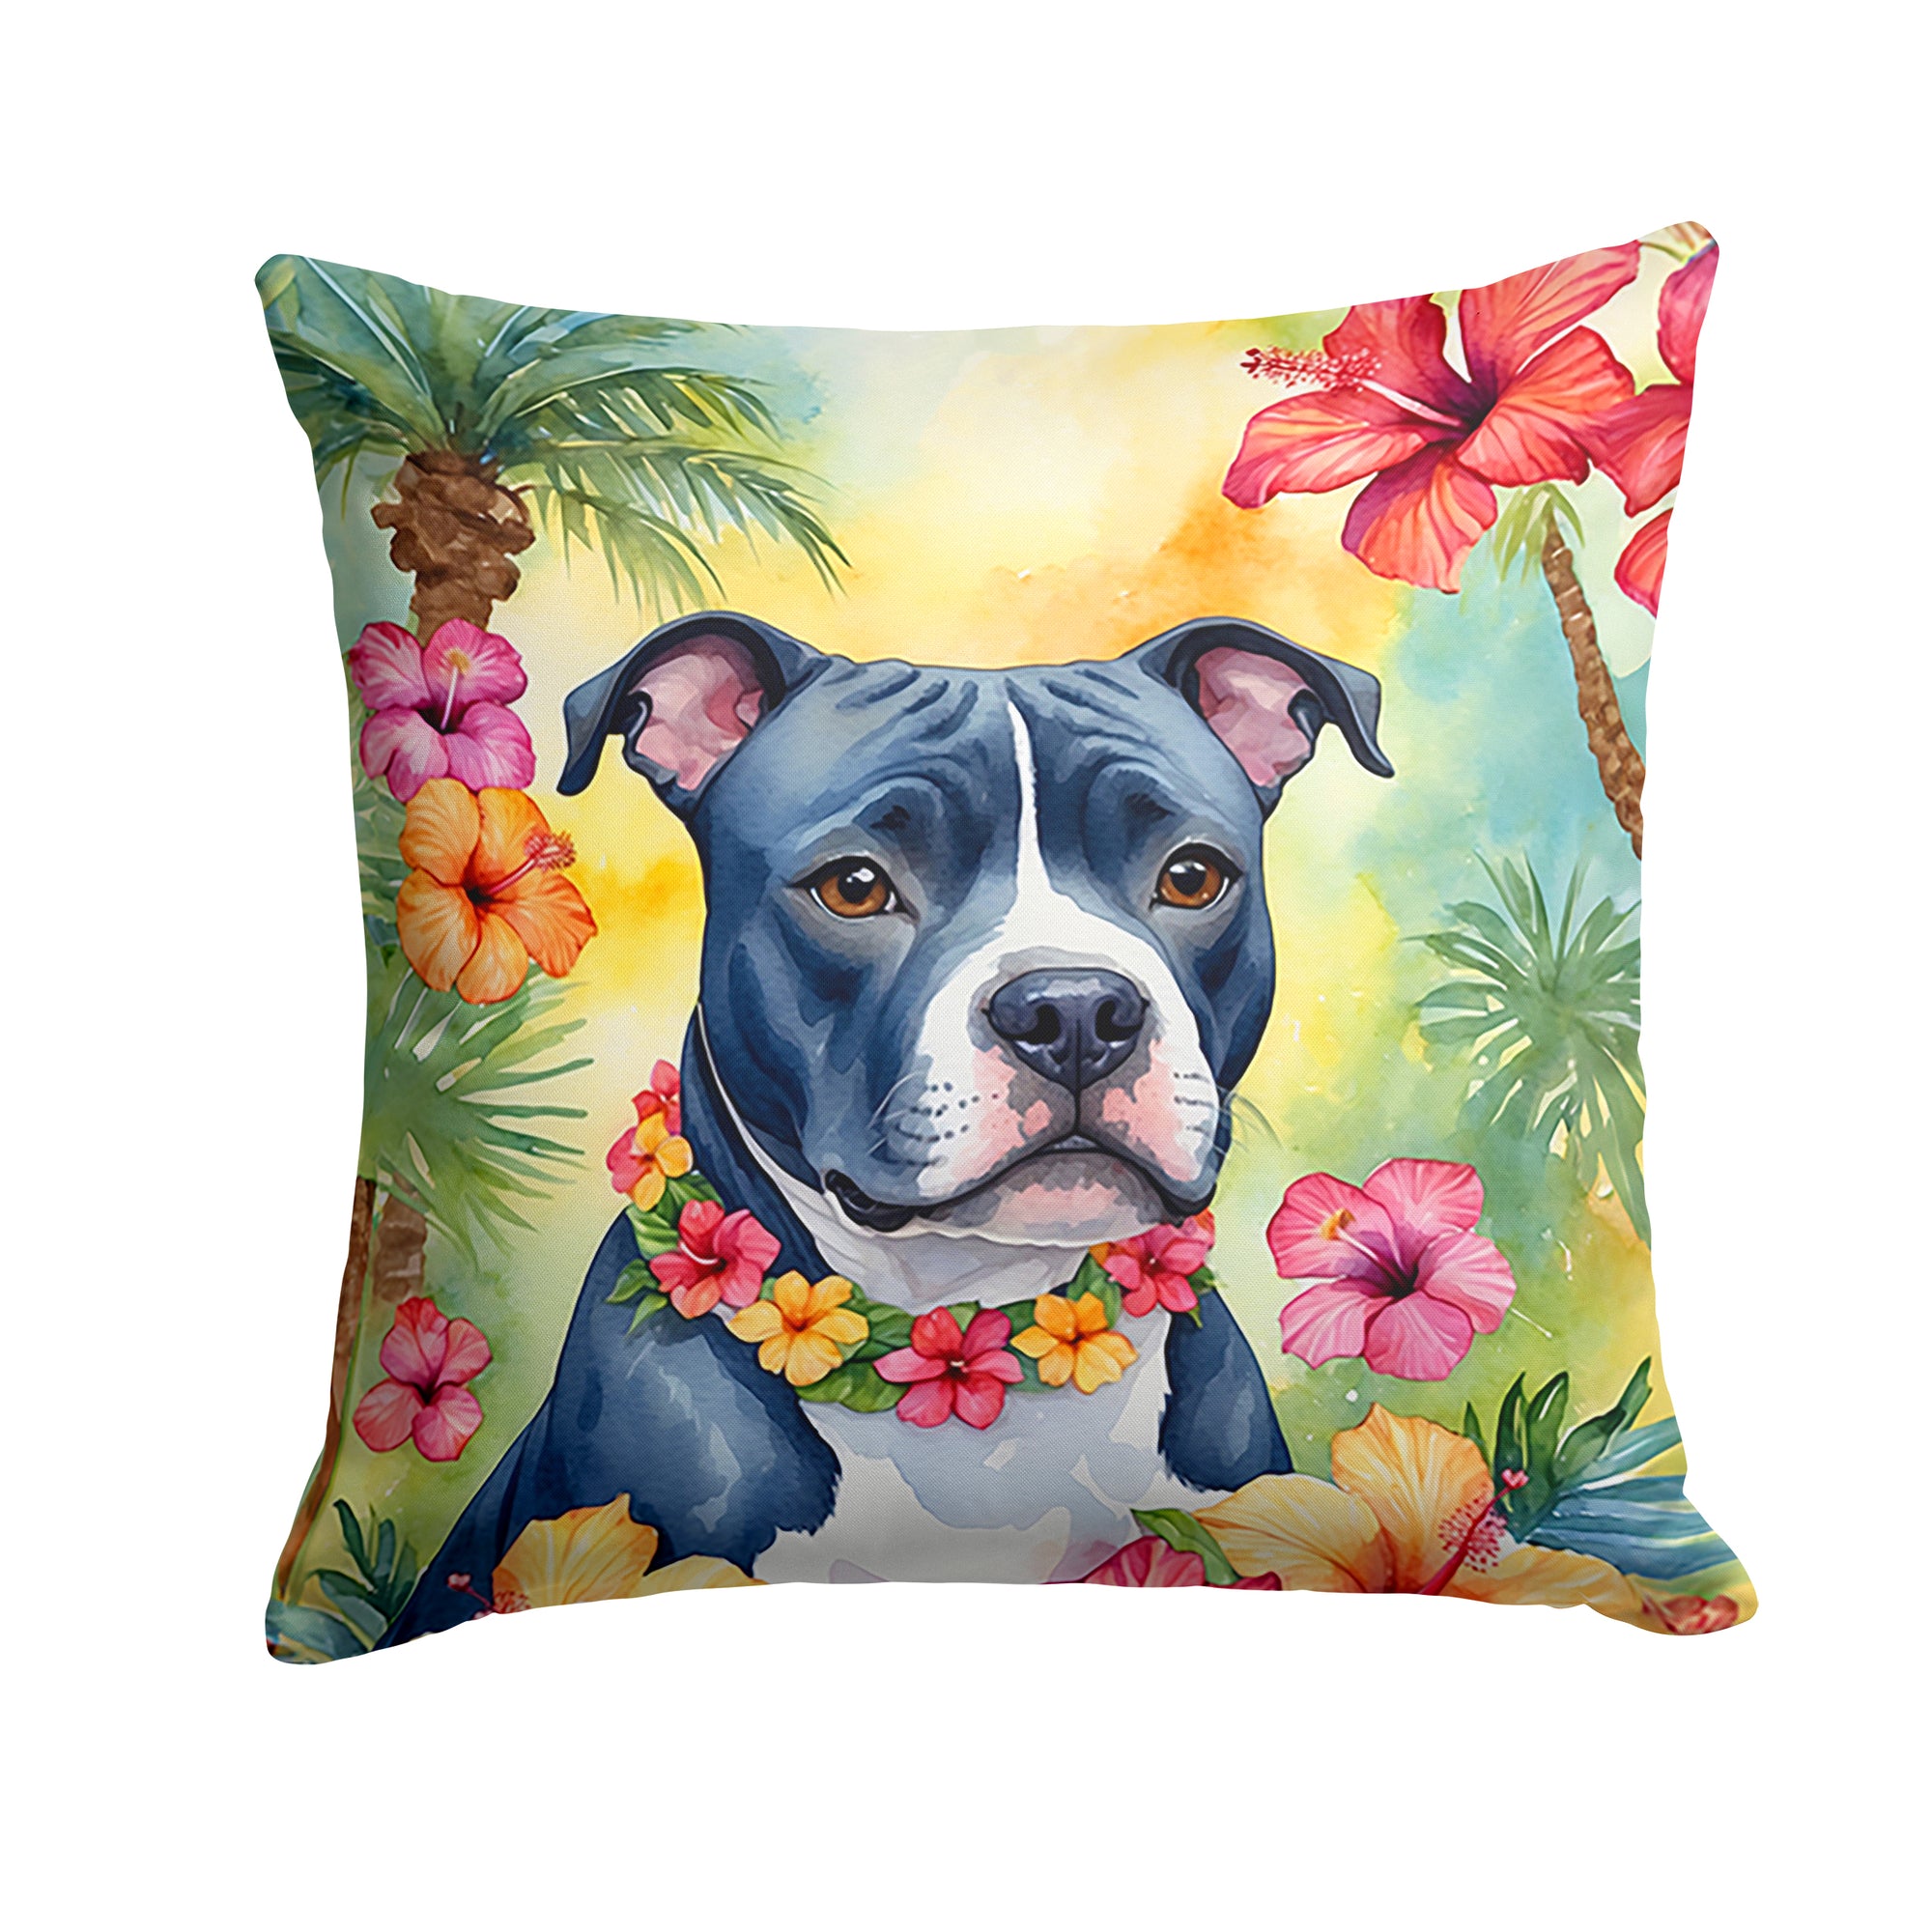 Buy this Staffordshire Bull Terrier Luau Throw Pillow